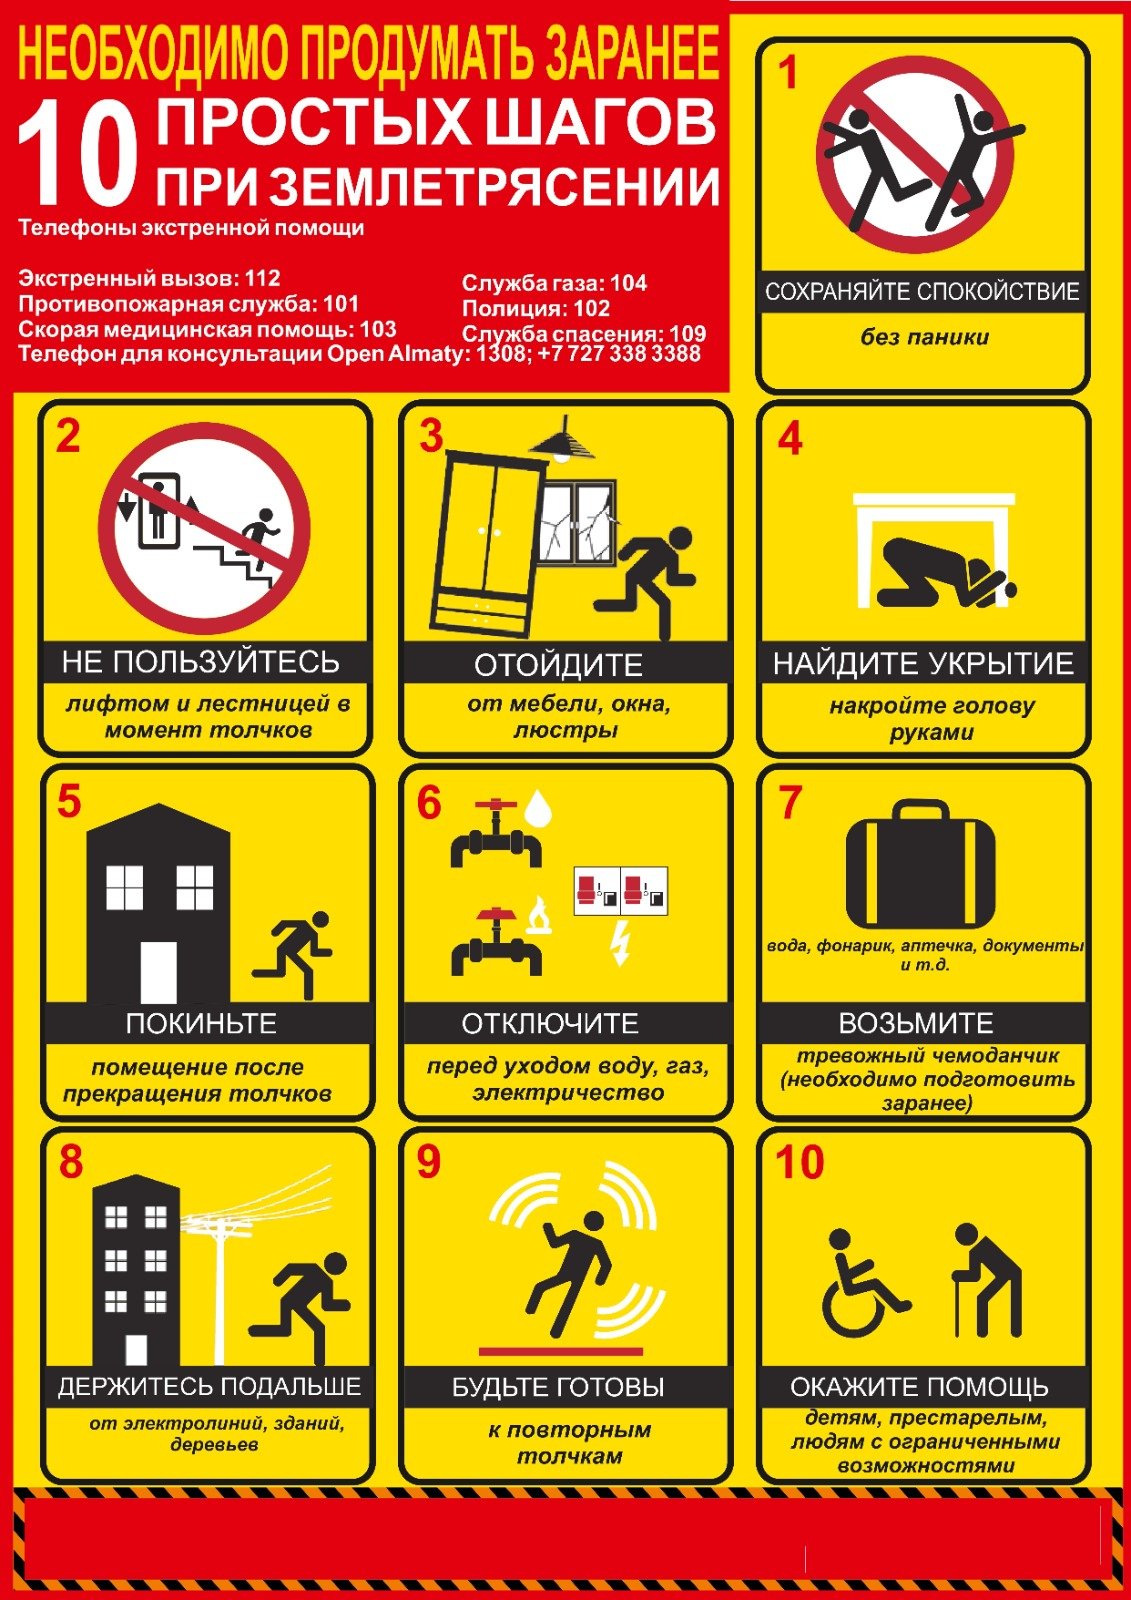 Правила безопасности при землетрясении